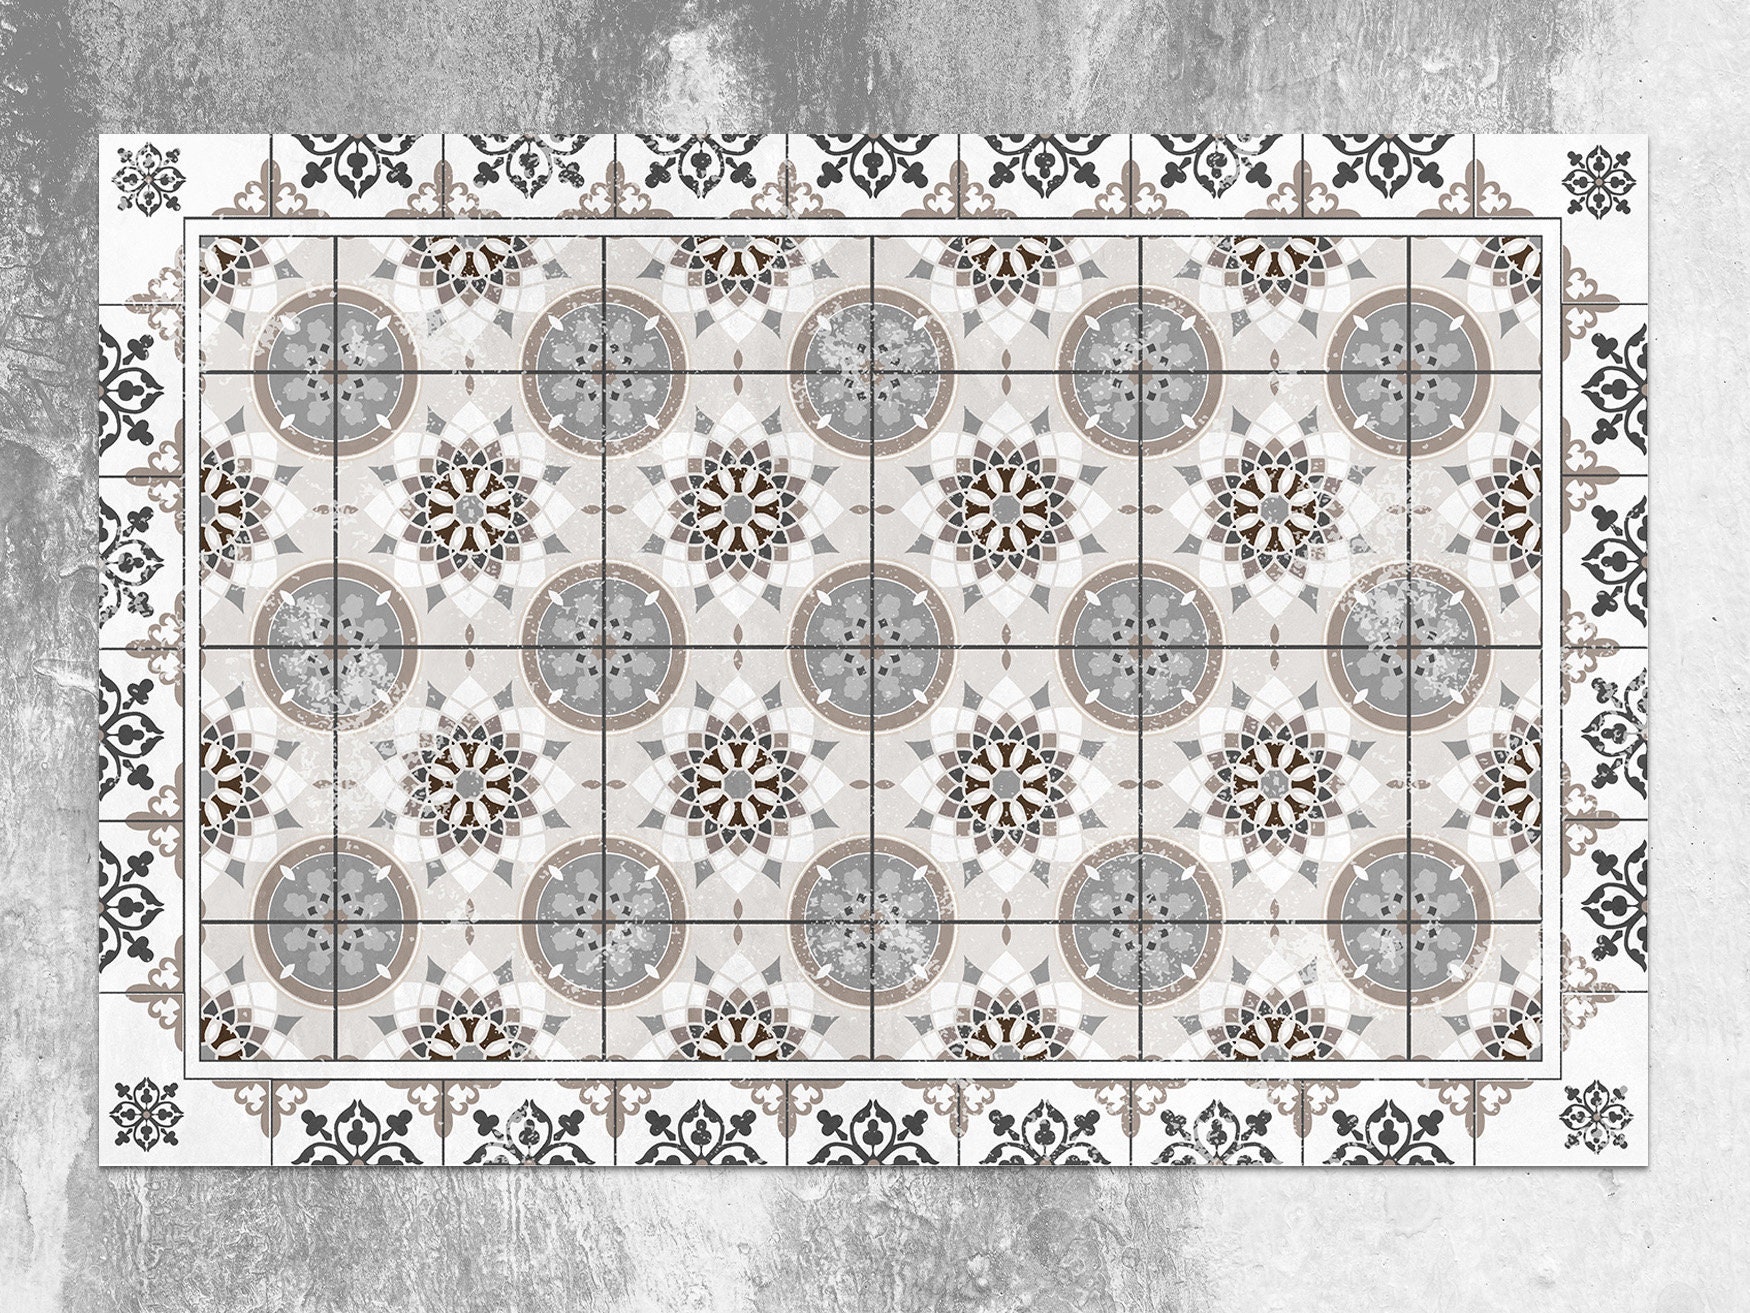 Details about   Tile Design Mosaic Hard Floor Rectangular Vinyl Mat in Assorted Sizes 